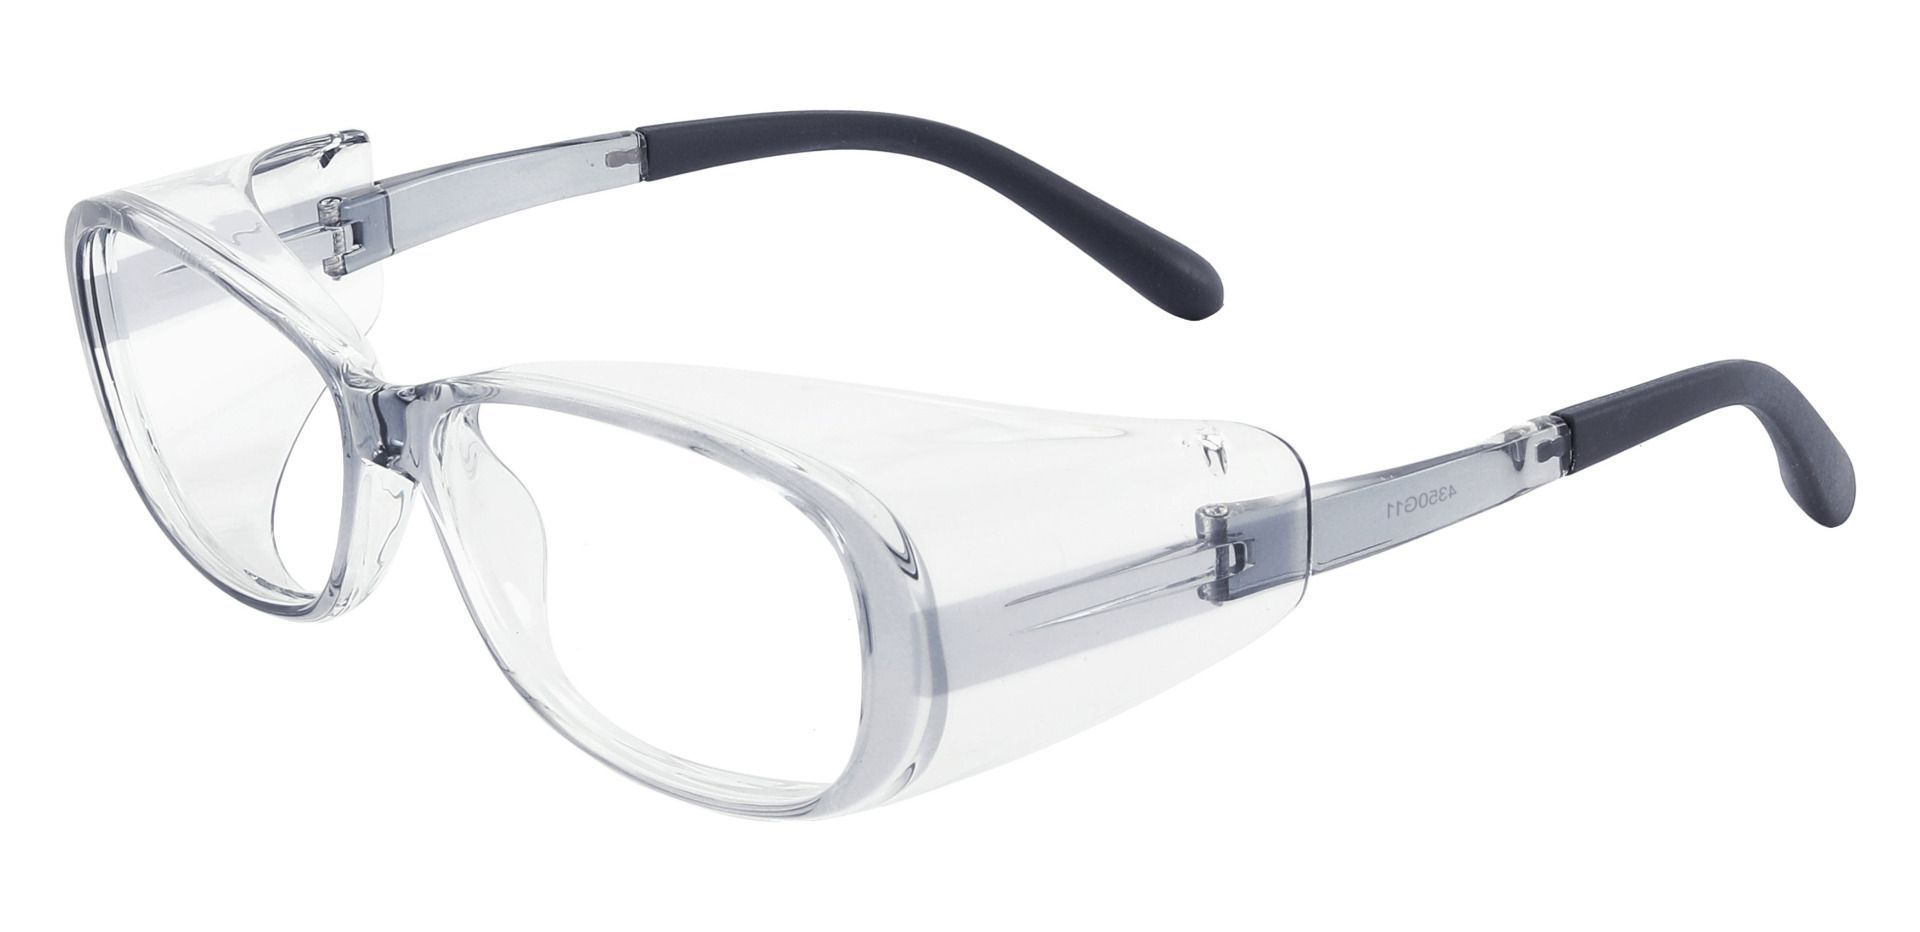 Omega Sports Goggles Blue Light Blocking Glasses - Gray